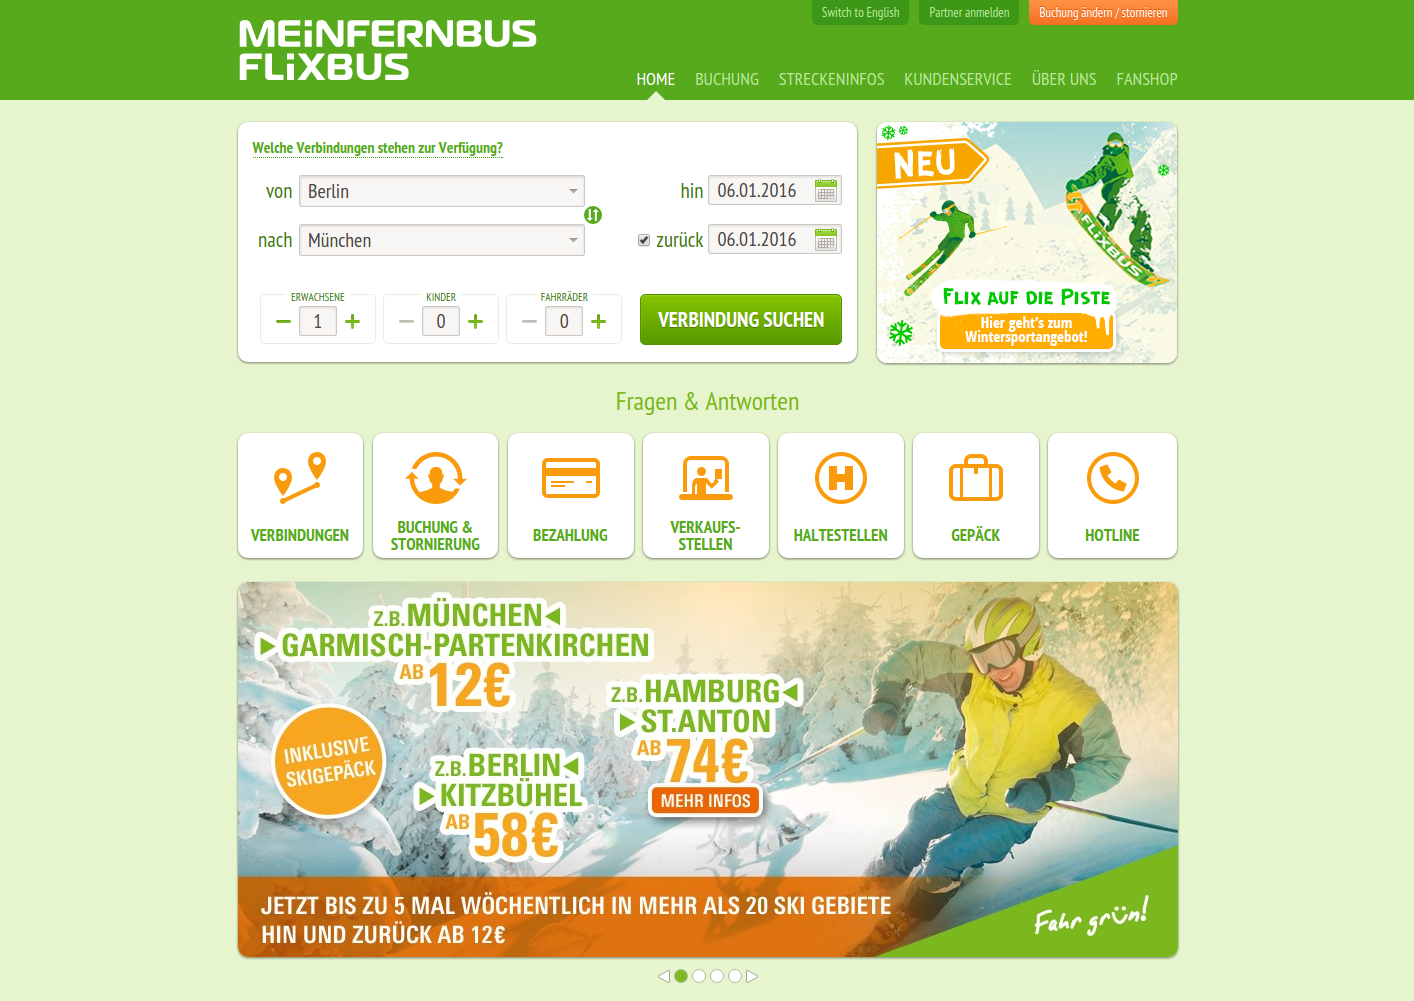 MeinFernbus transportation company website made with Symfony2